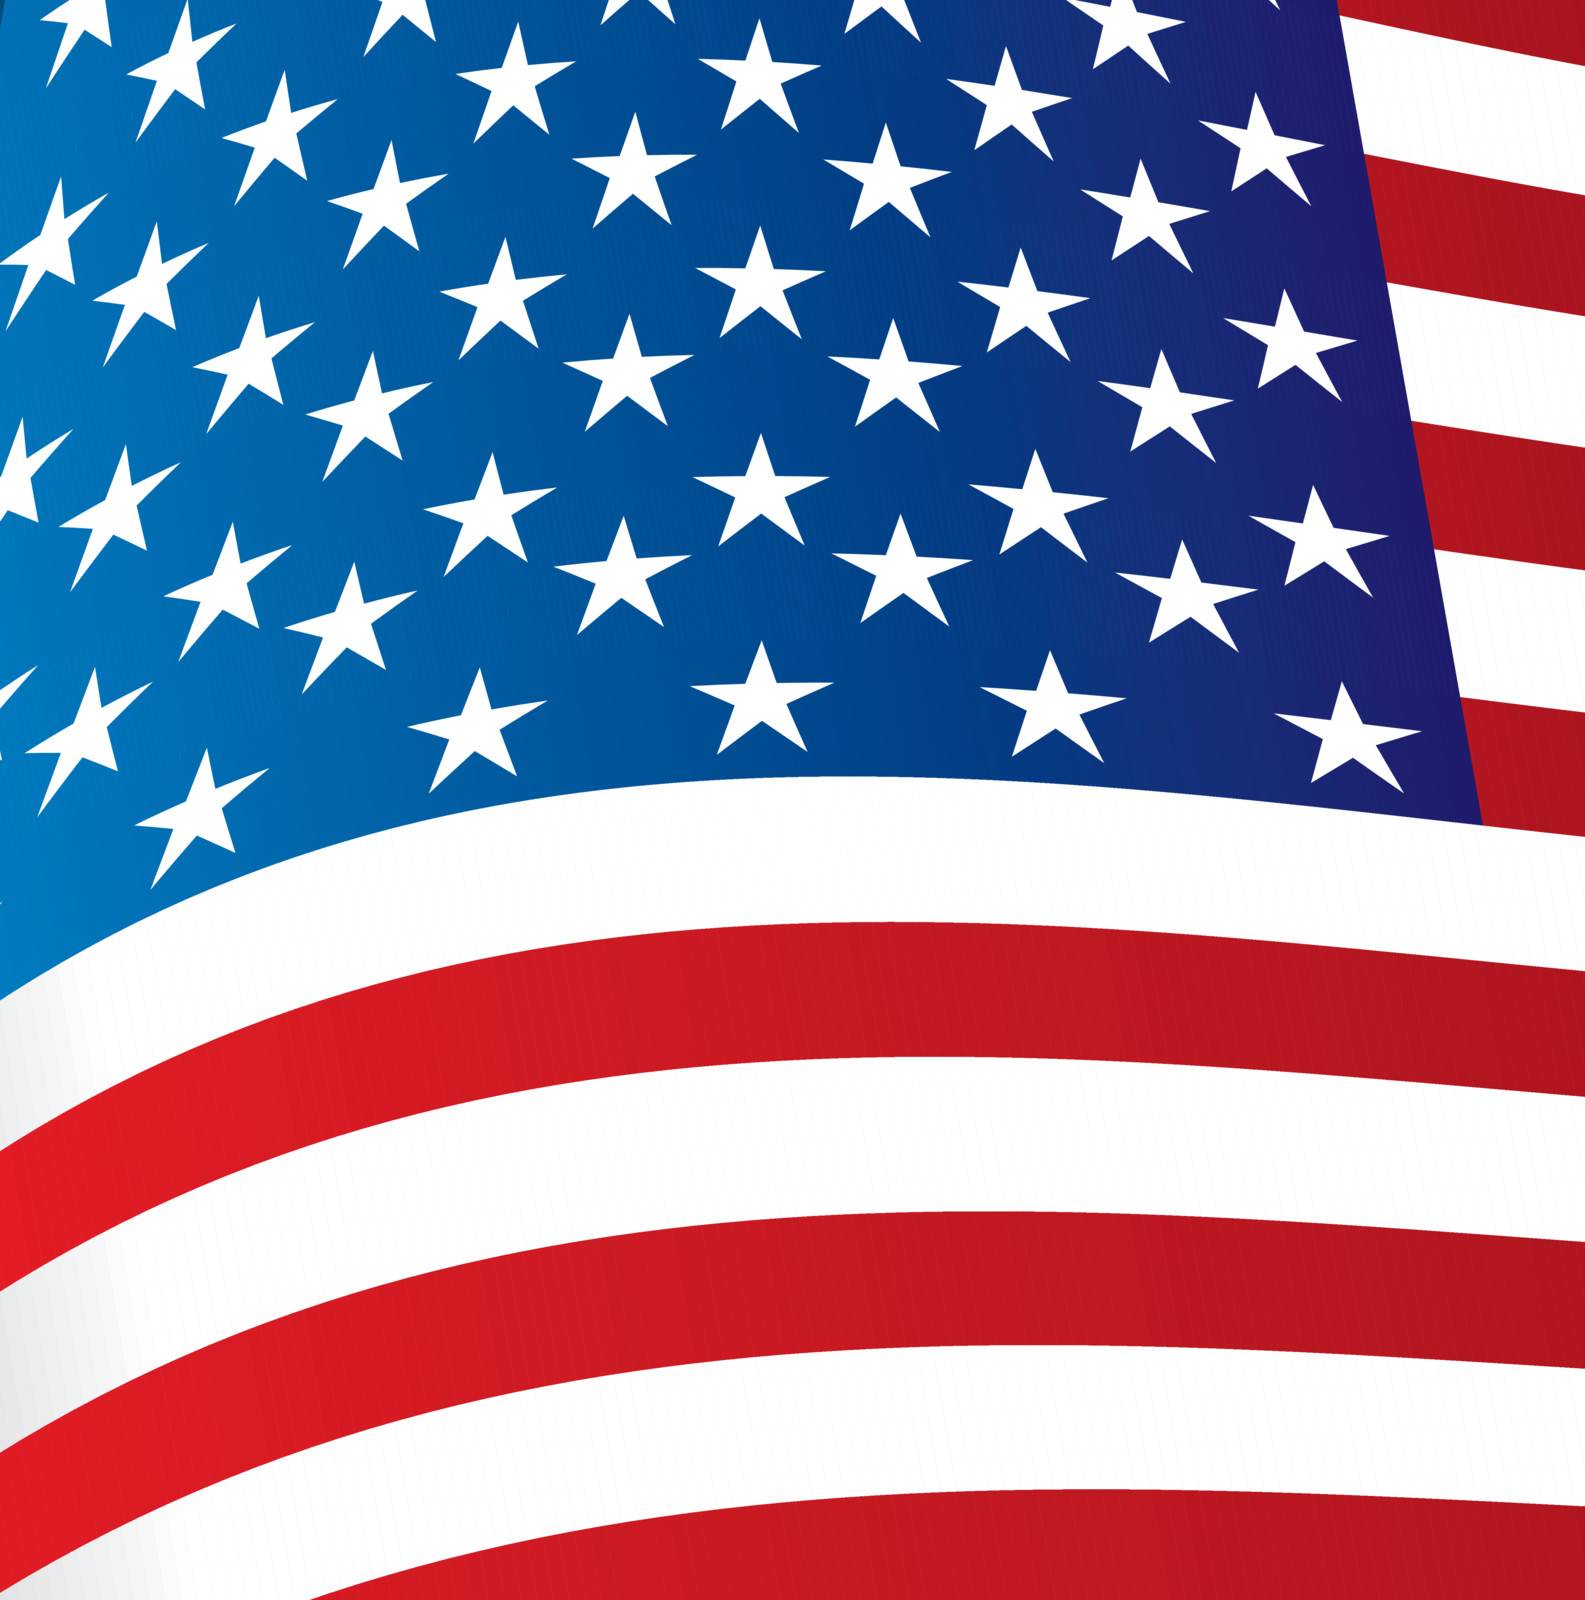 Big Flag of United States background vector illustration